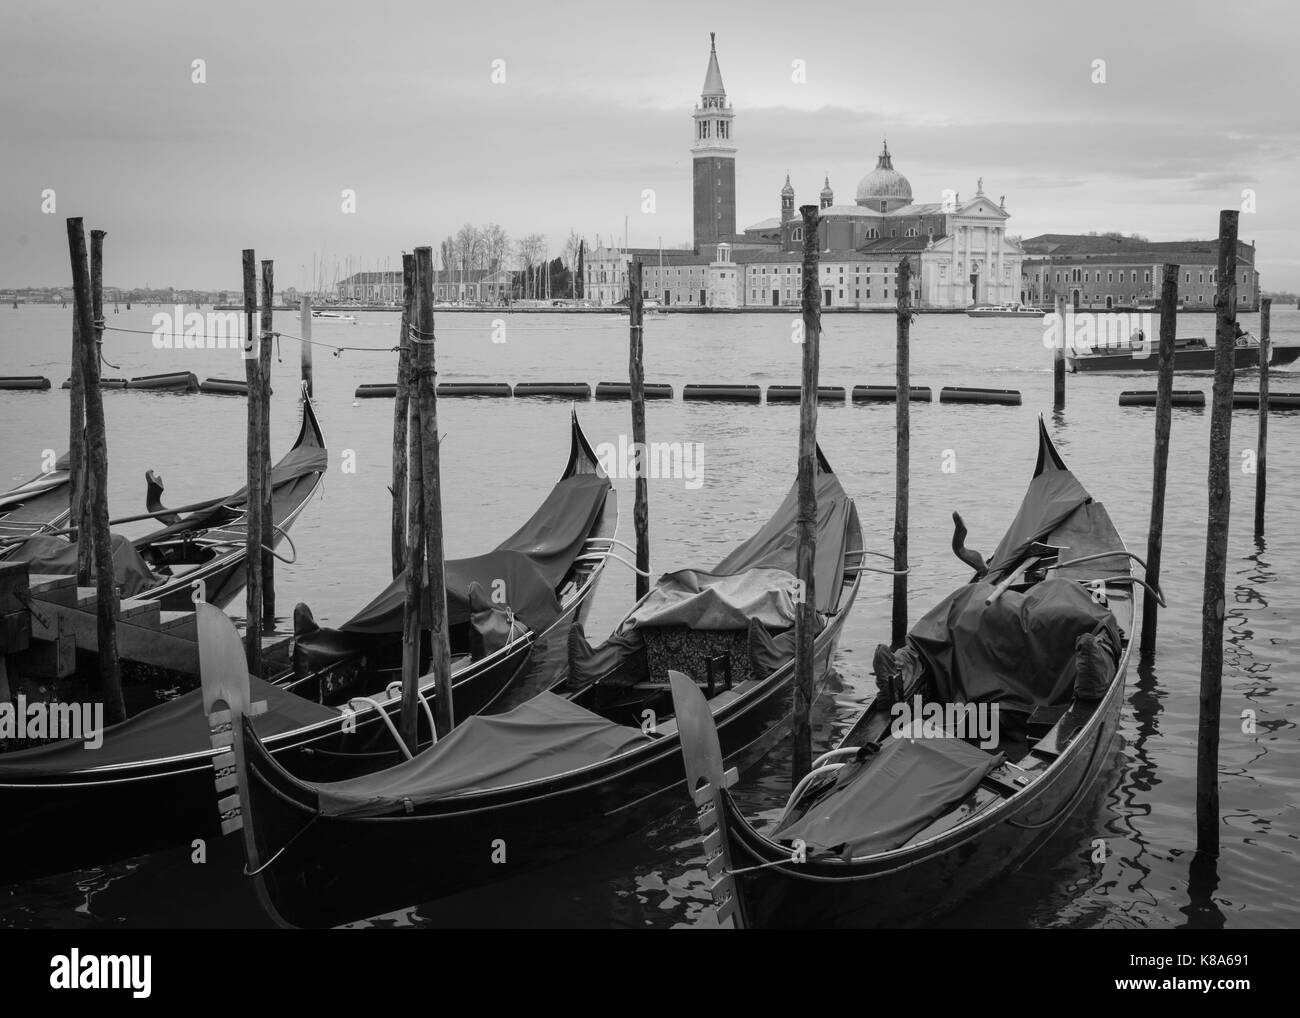 Venice - Italy - Venetian gondola's moored on Grand Canal with San Giorgio Maggiore Church in background. Stock Photo